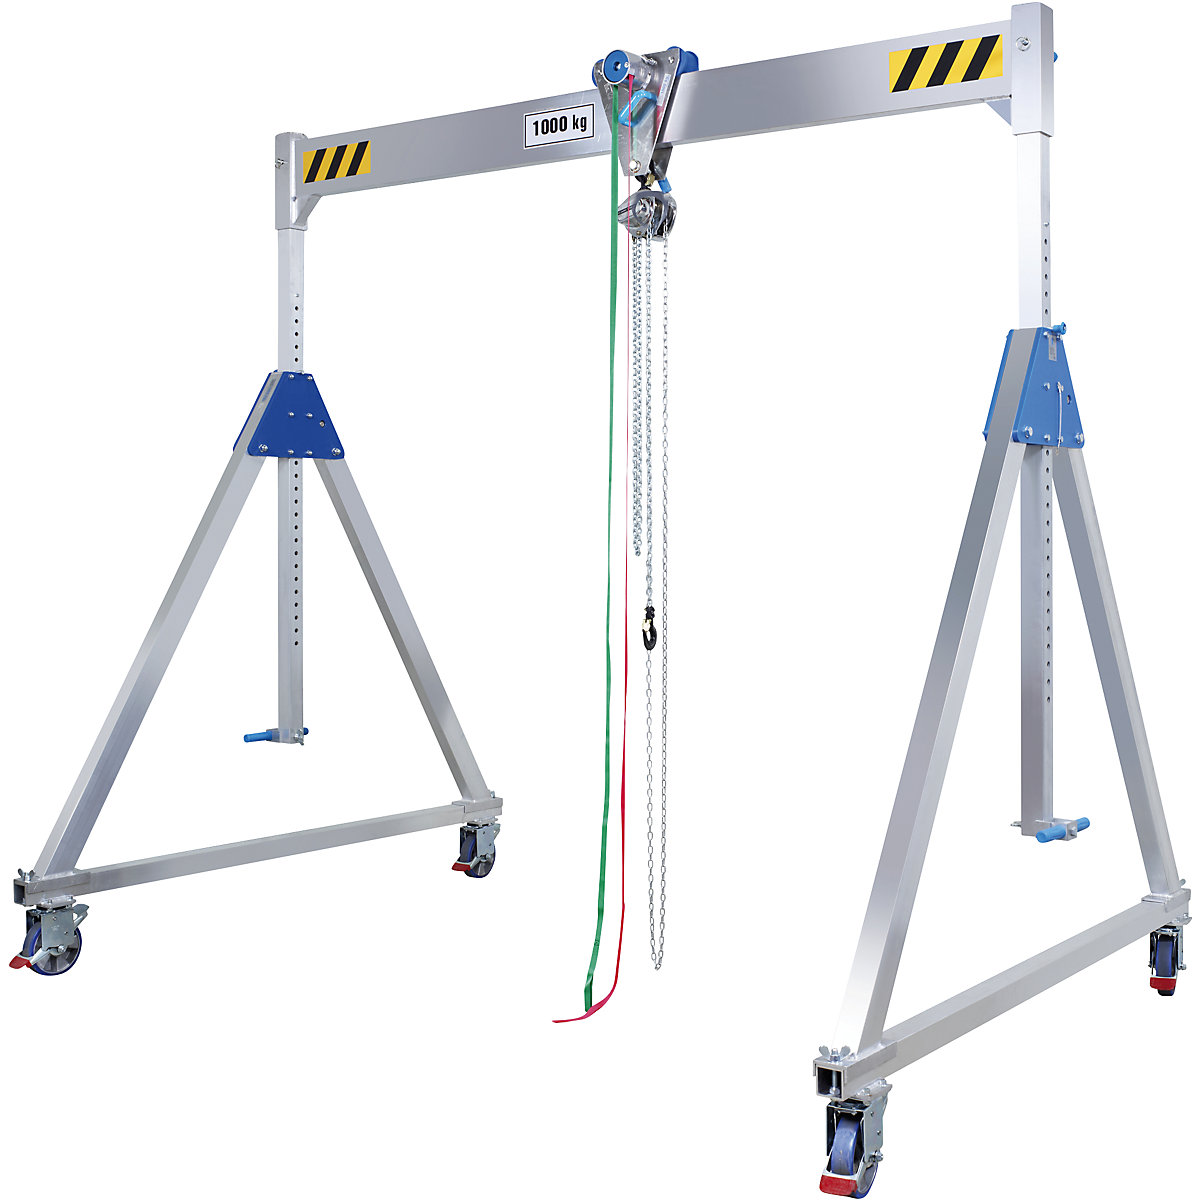 ALU1 aluminium gantry crane – Vetter